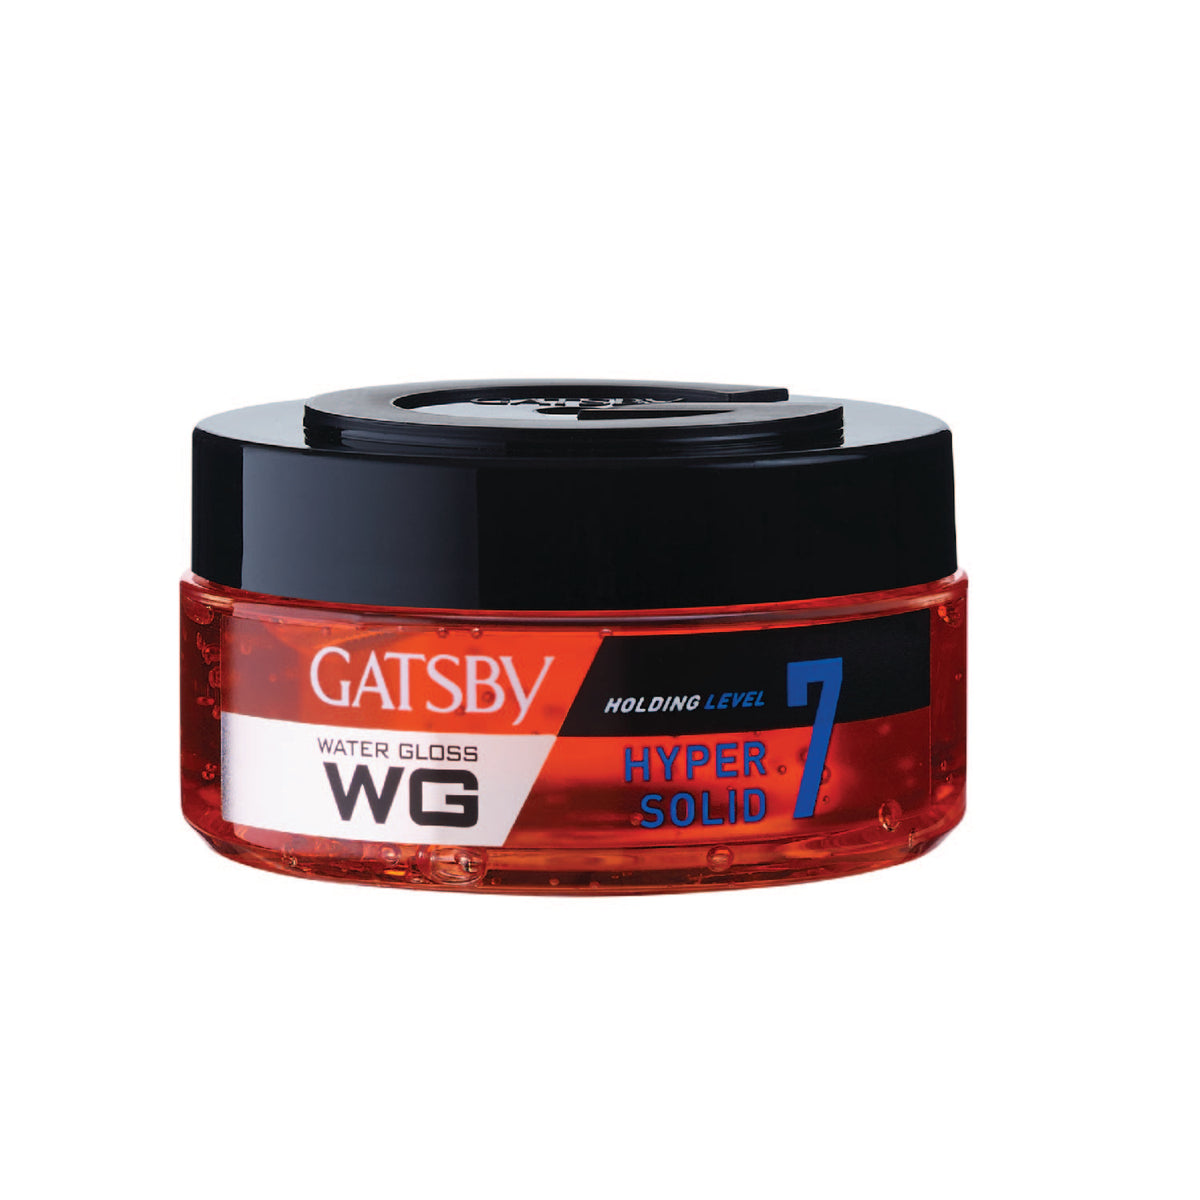 Gatsby Water Gloss - Hyper Solid, 75g Gardenia Cosmotrade LLP